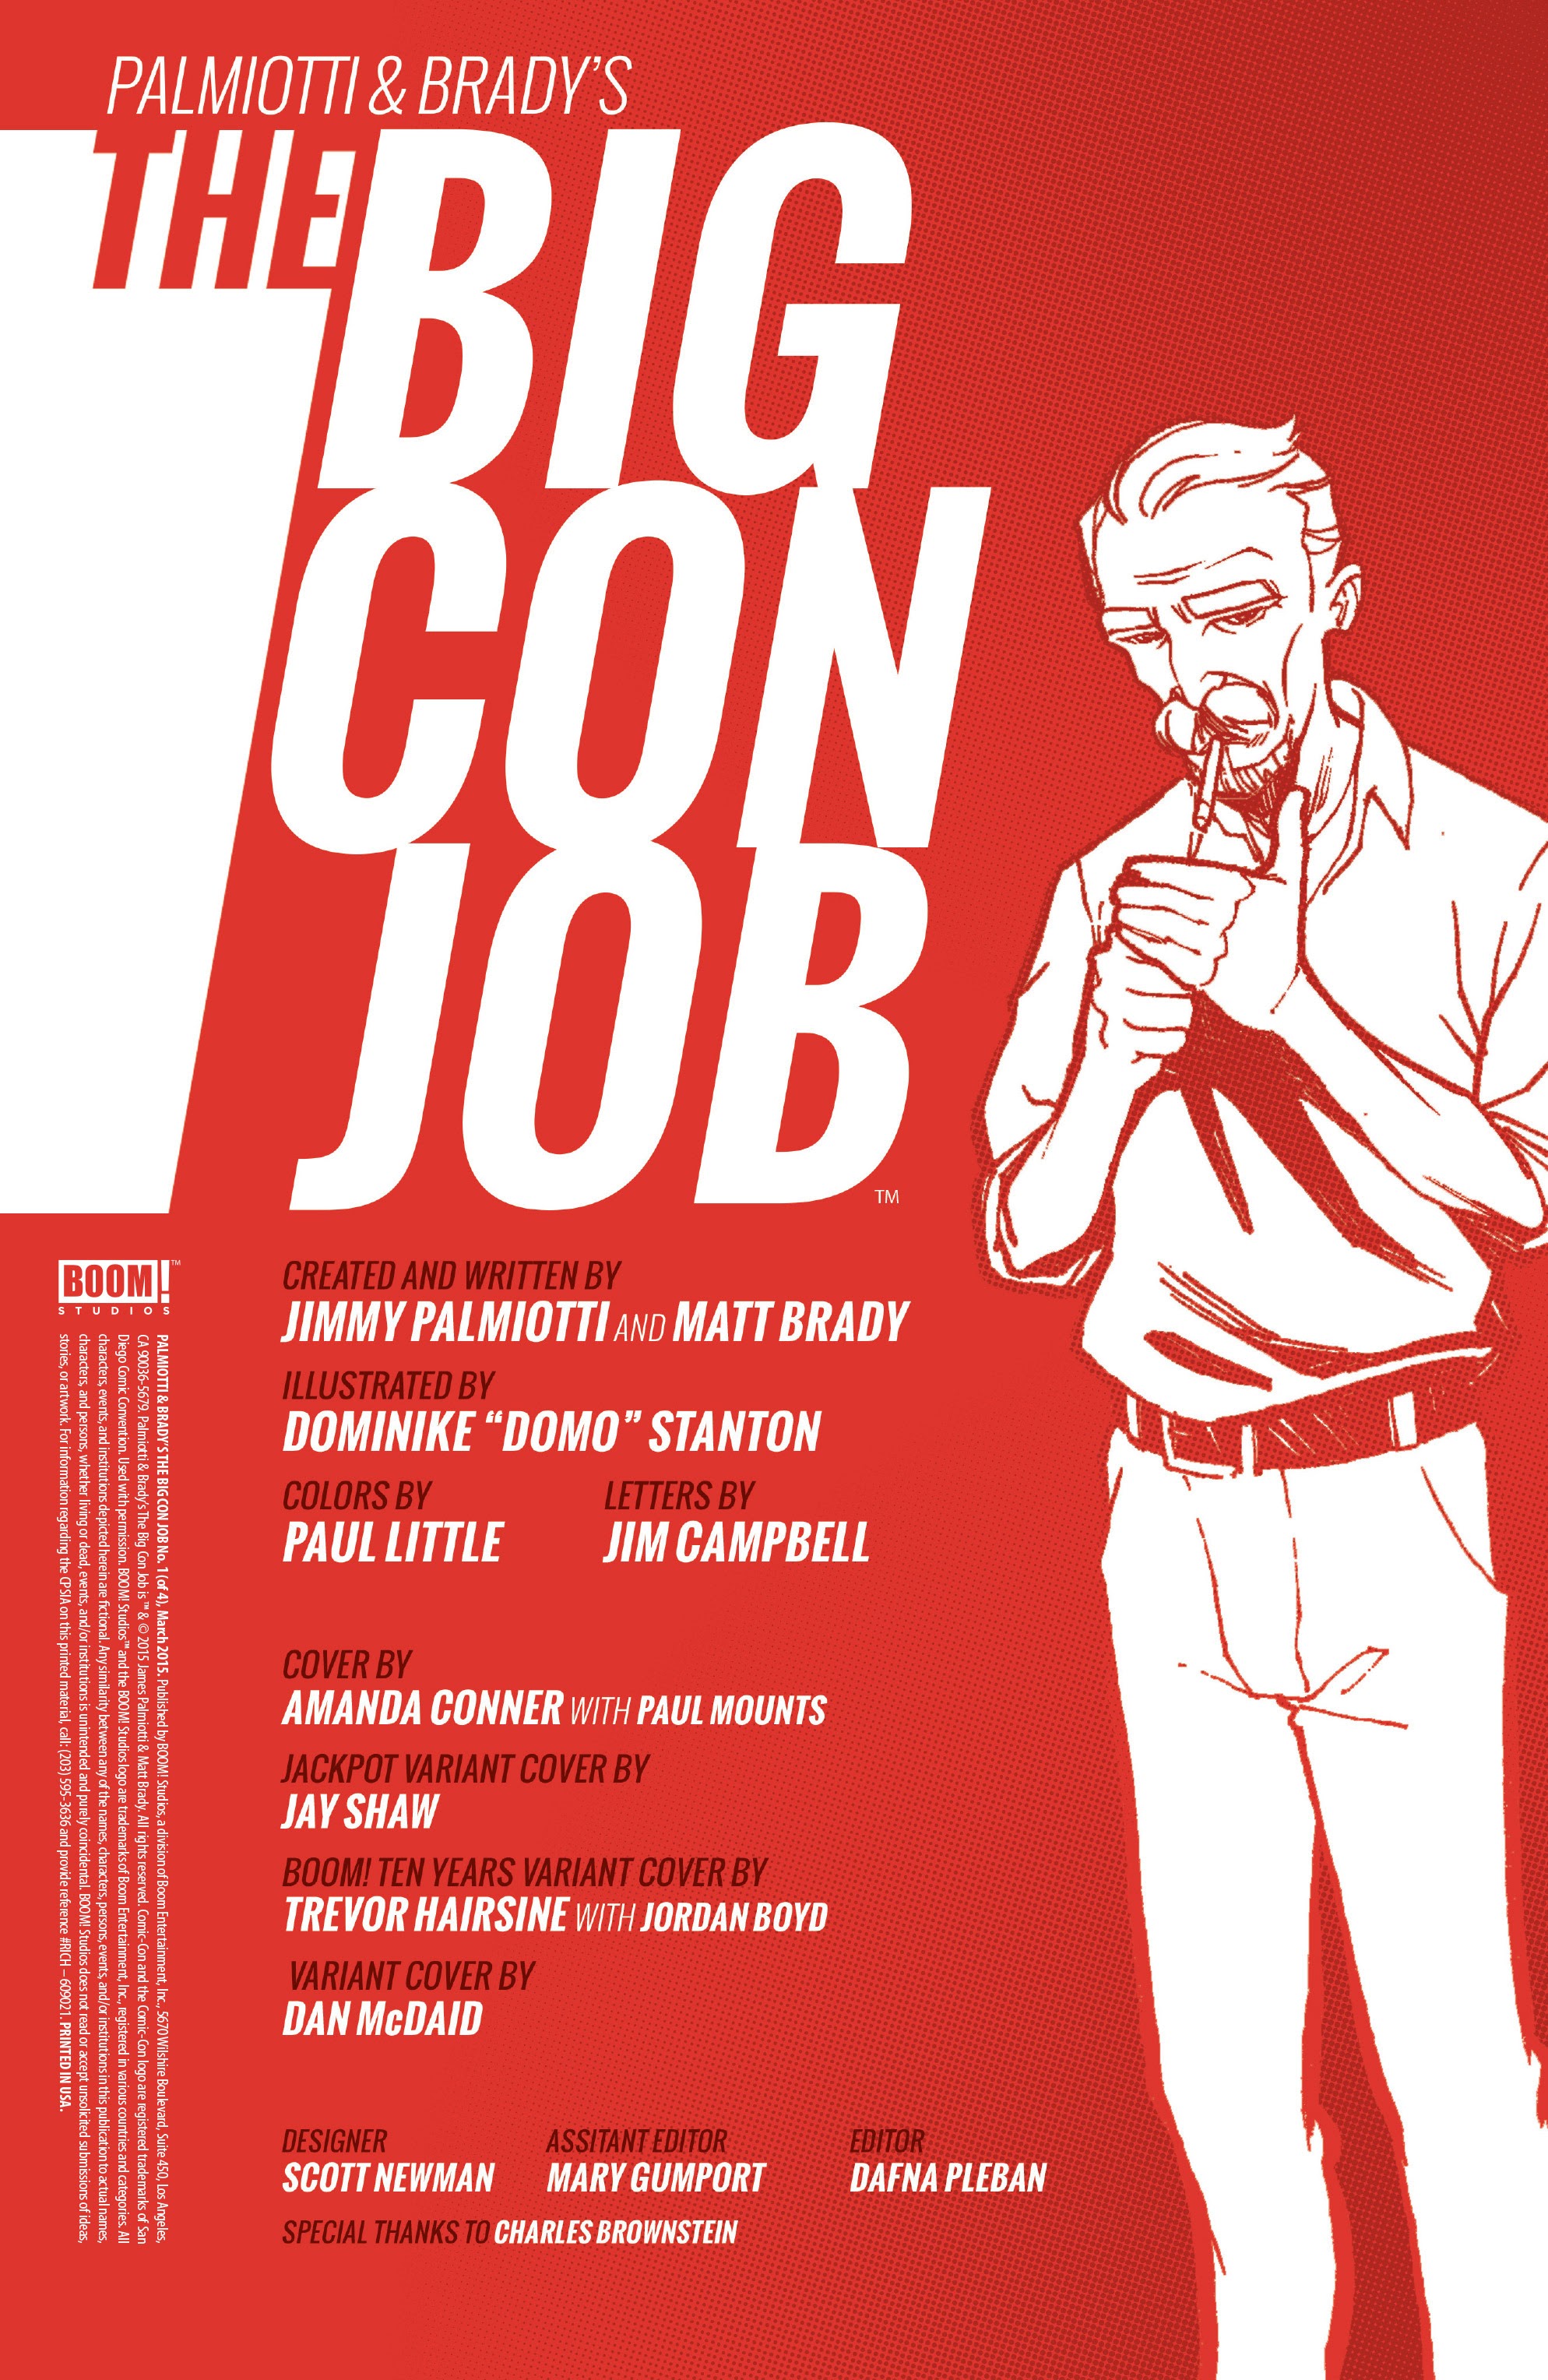 Read online Palmiotti & Brady's The Big Con Job comic -  Issue #1 - 2